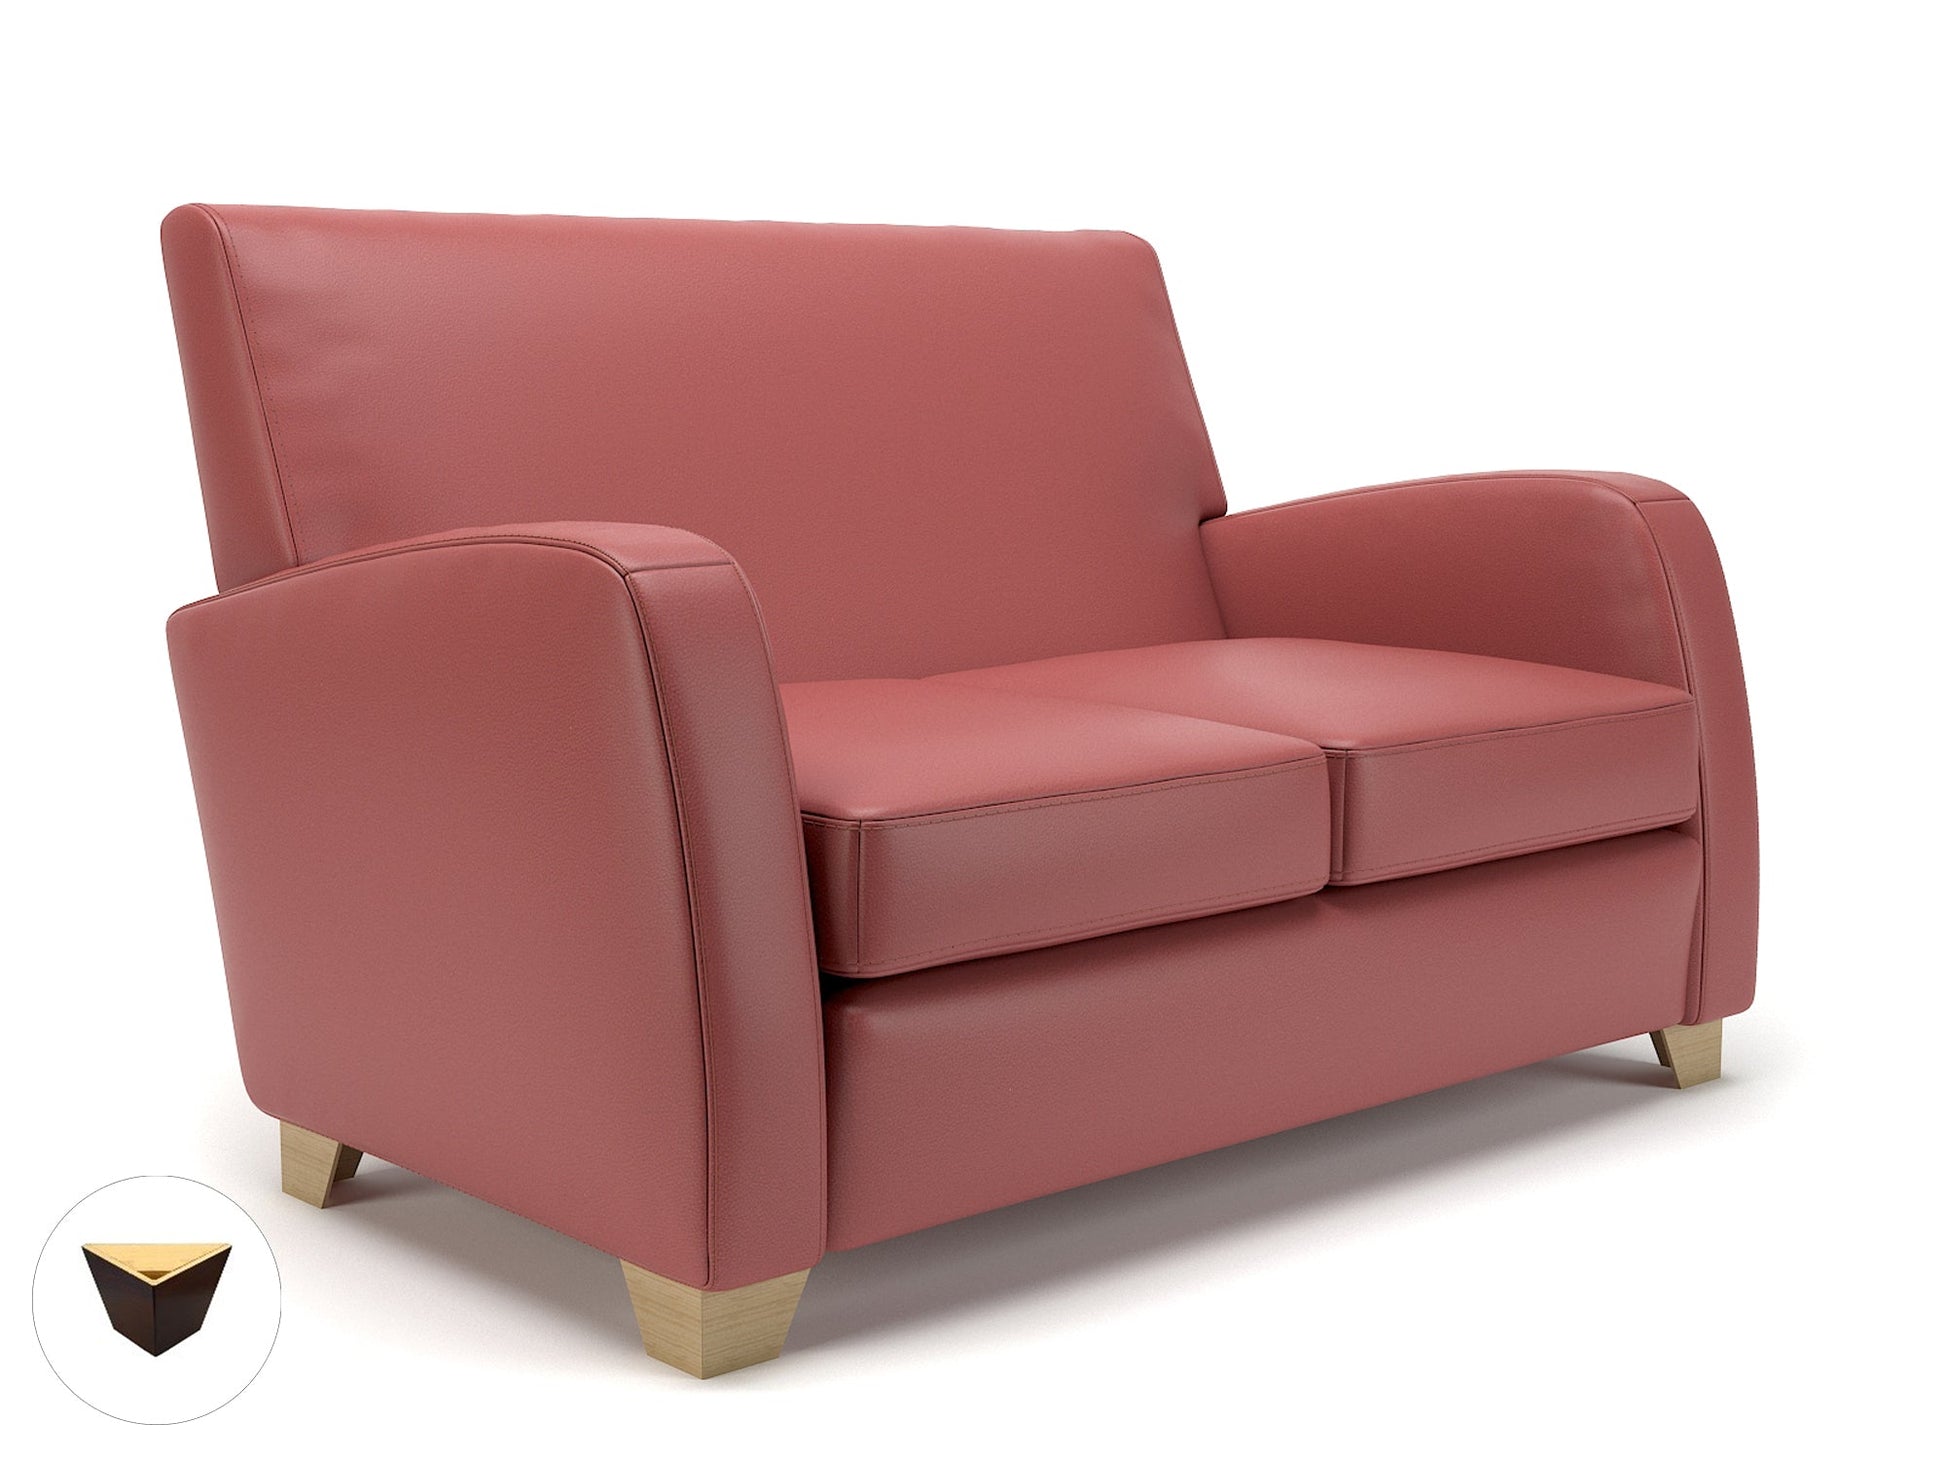 Wynne 132cm Wide Sofa in Cristina Marrone Ultima Faux Leather